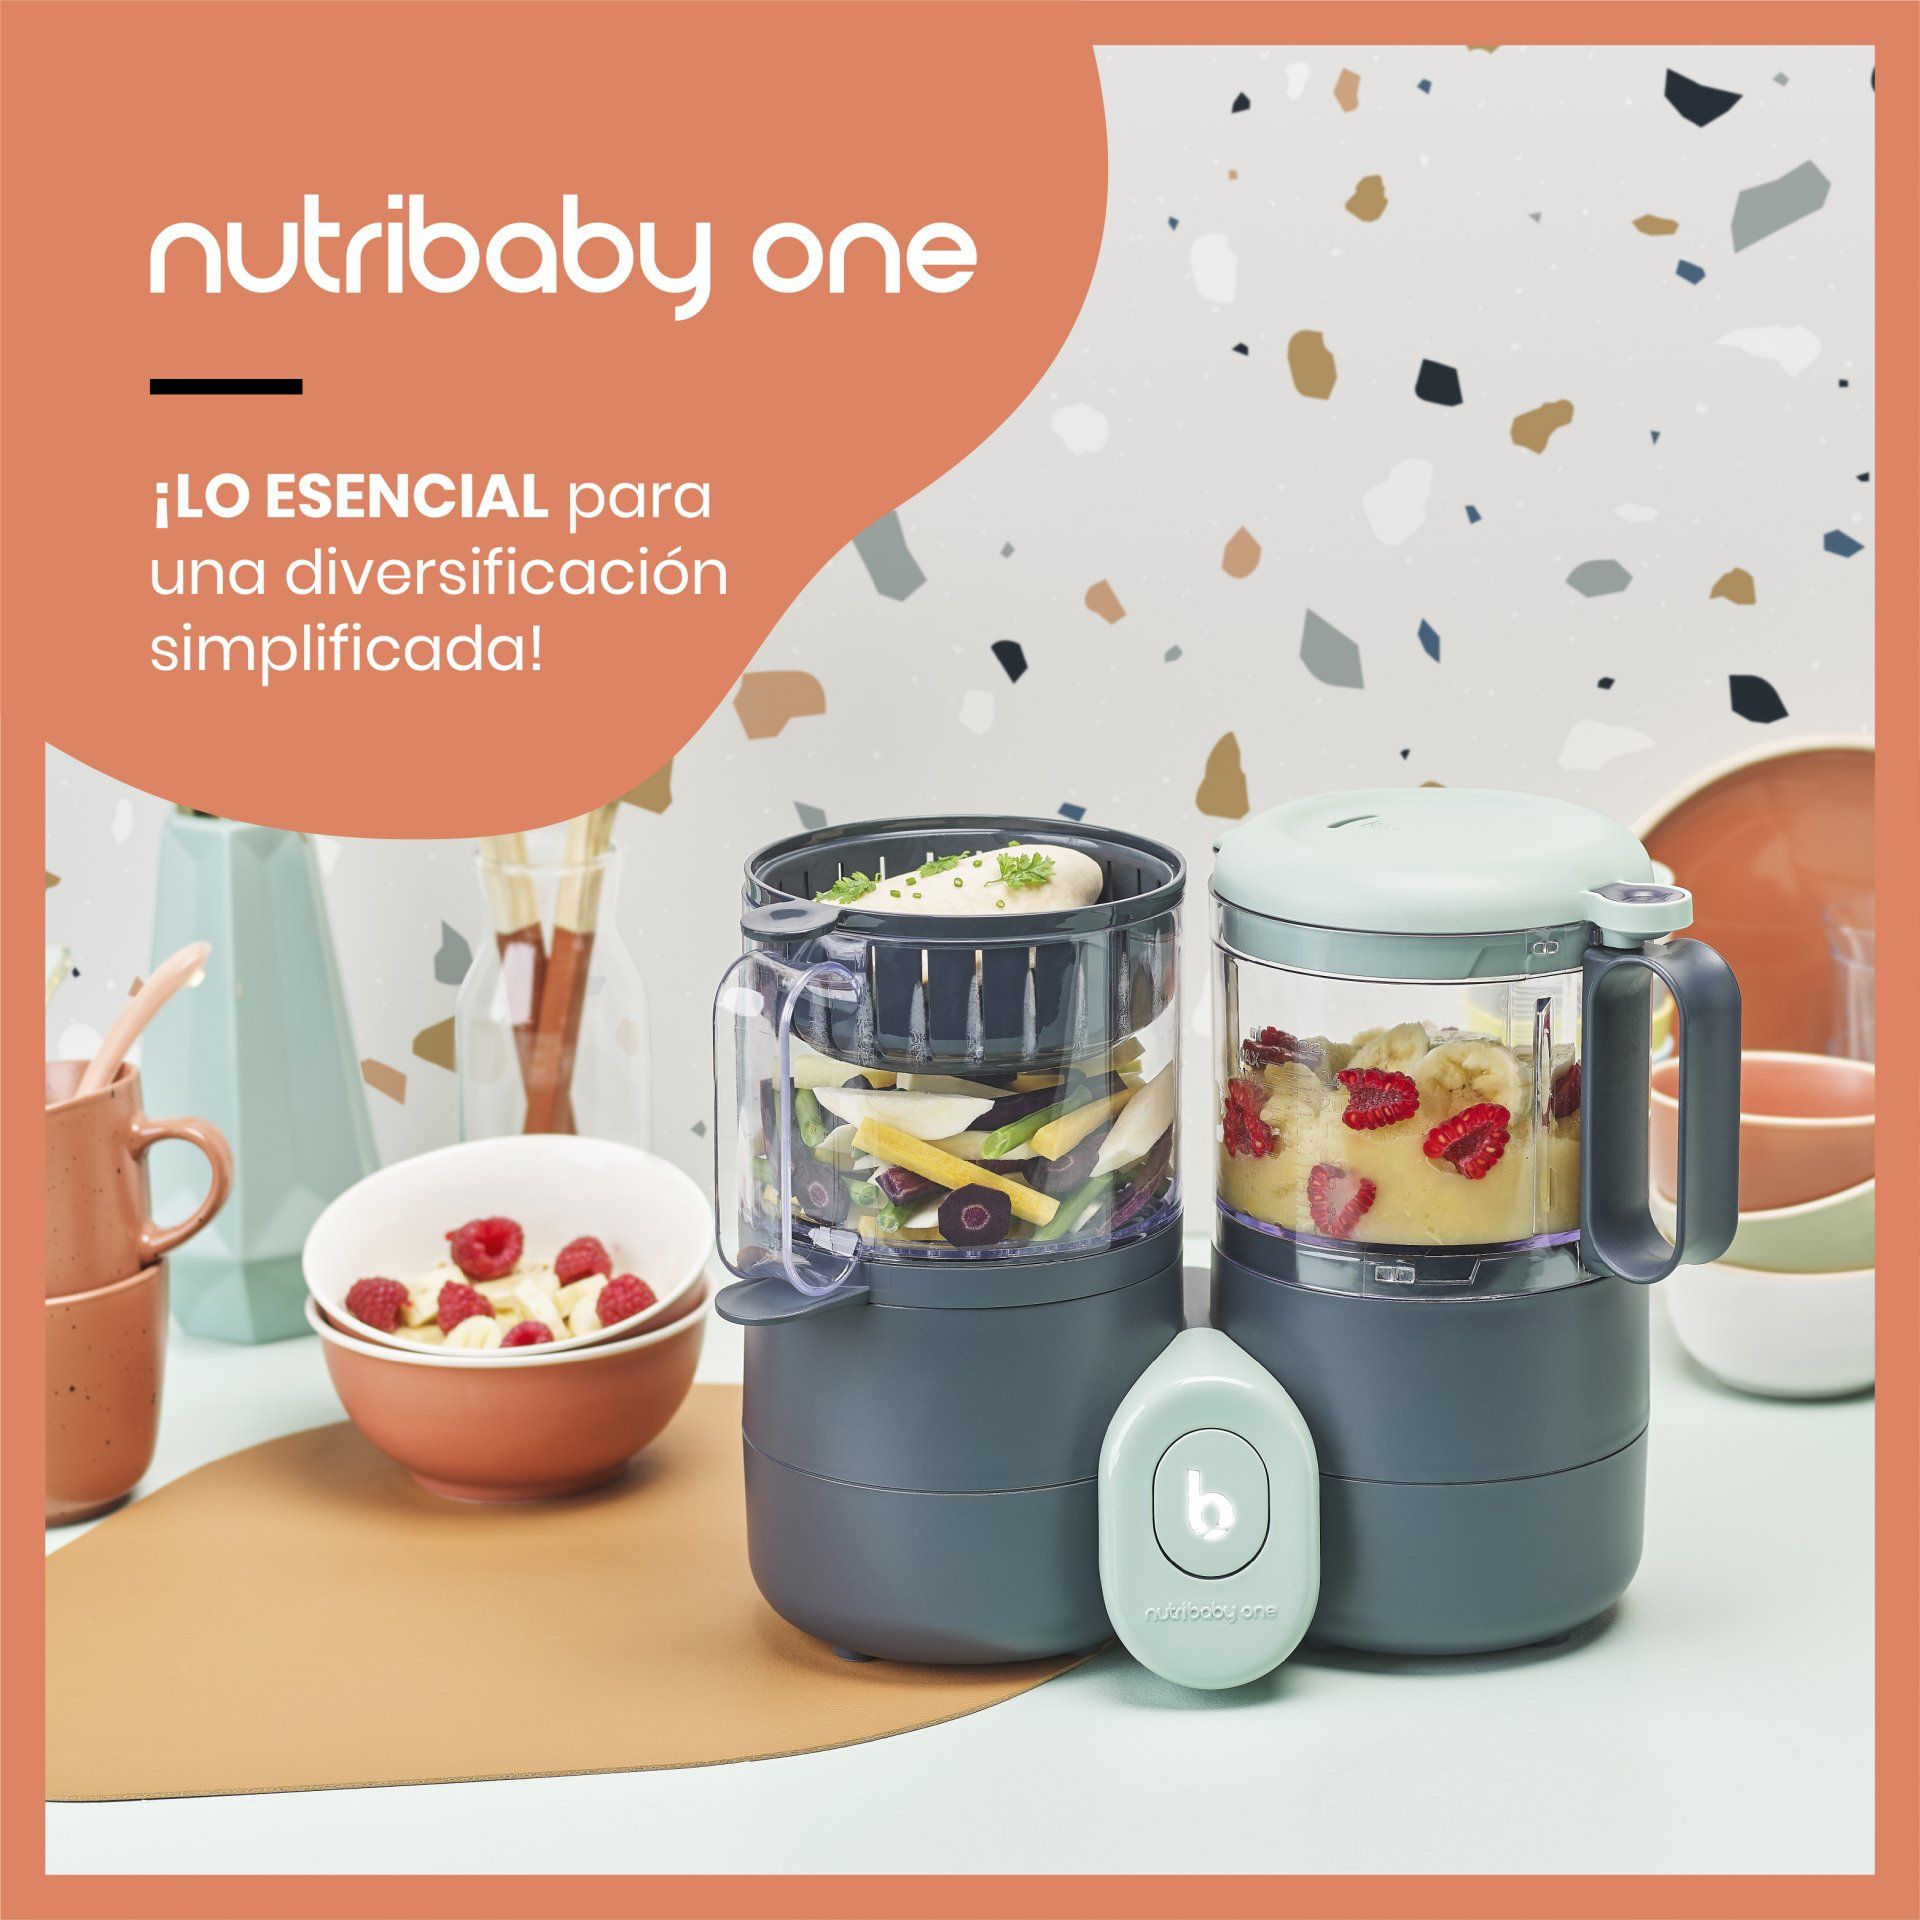 Nutrbaby One